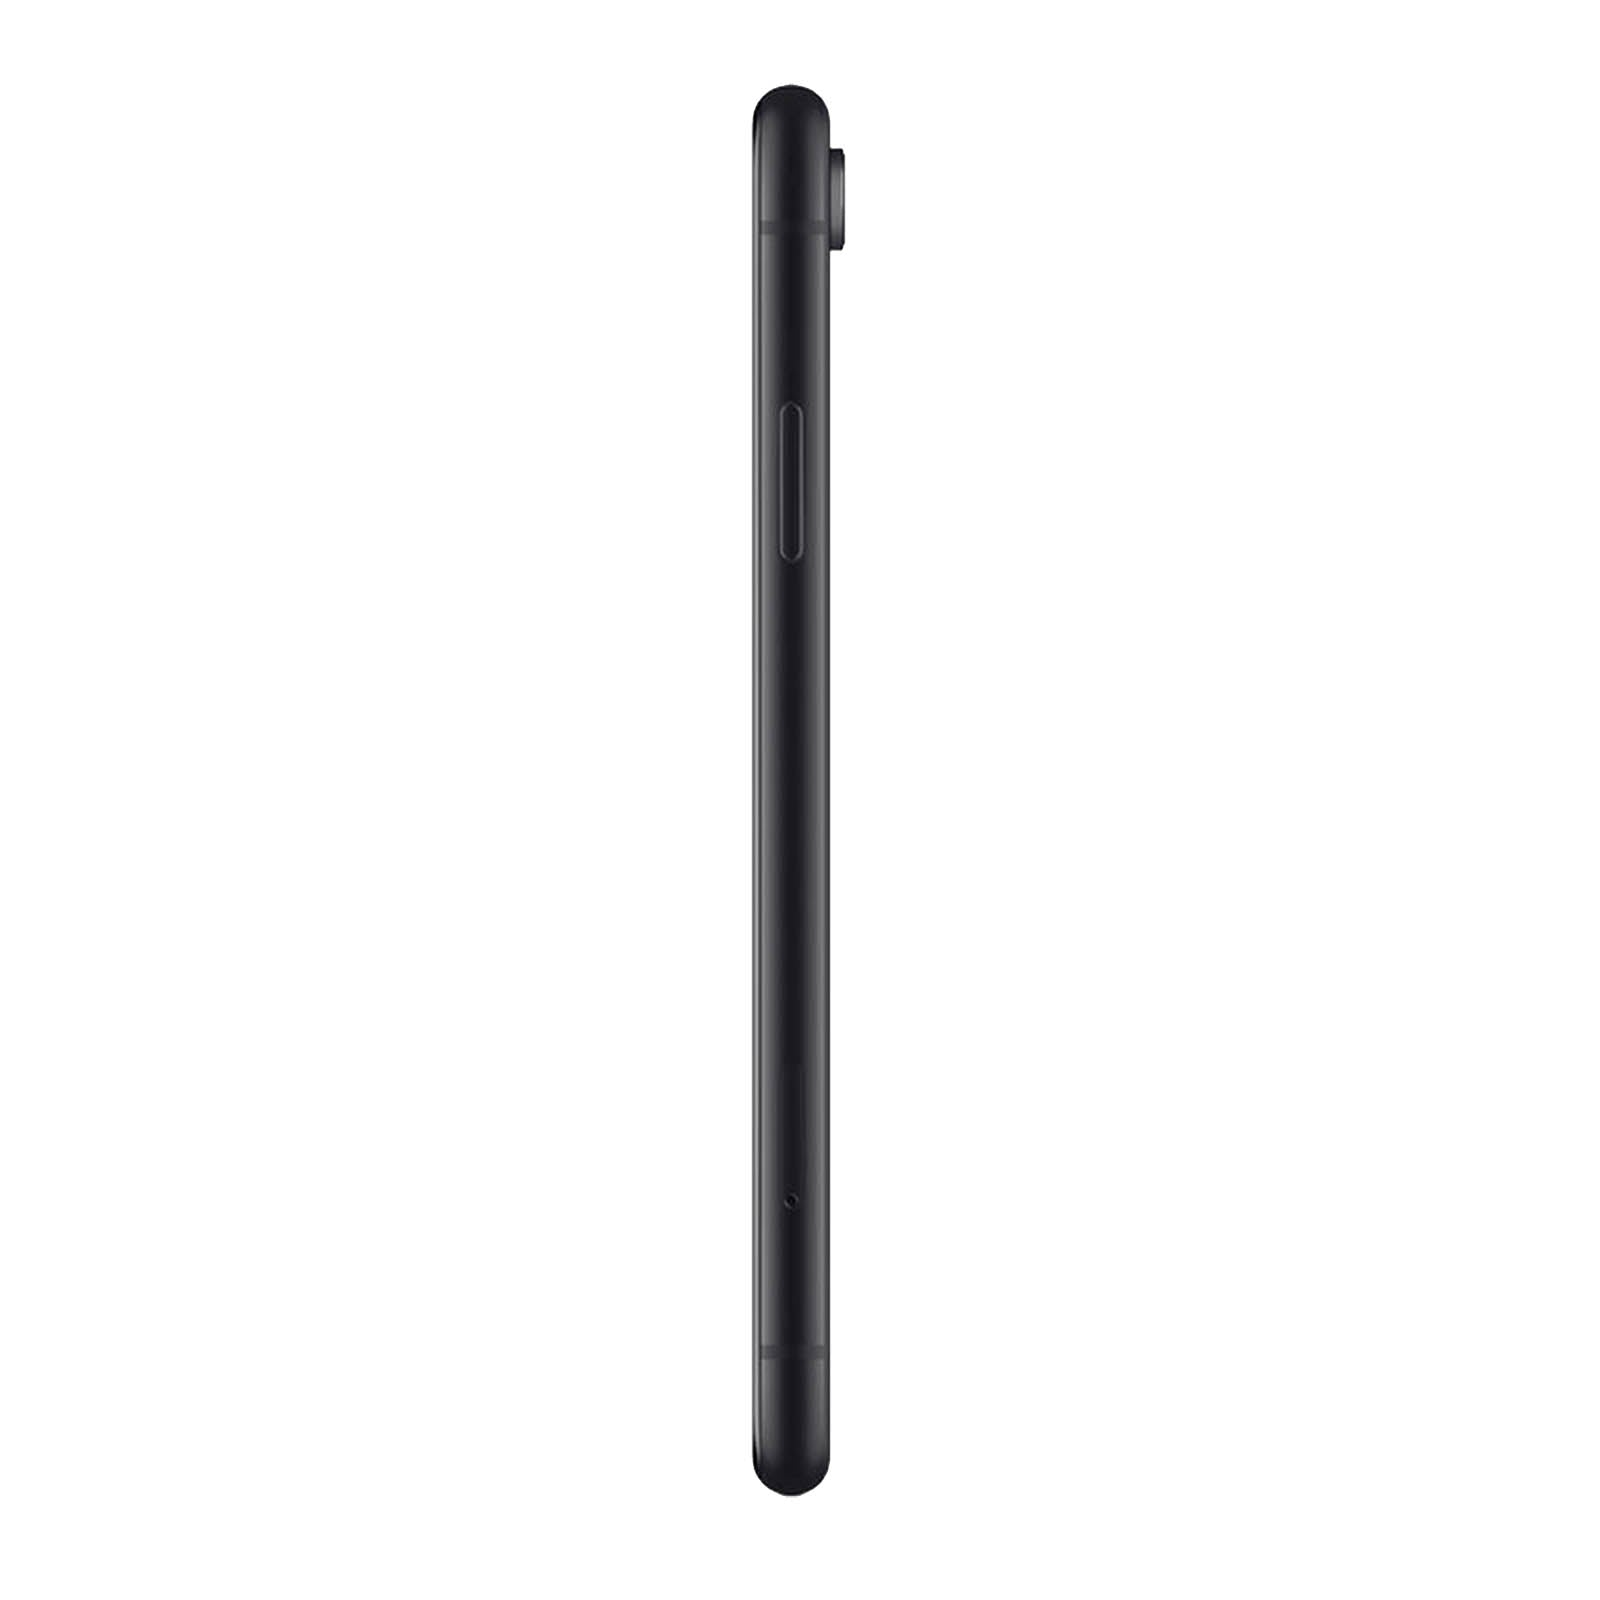 Apple iPhone XR 128GB Black Pristine - Sprint